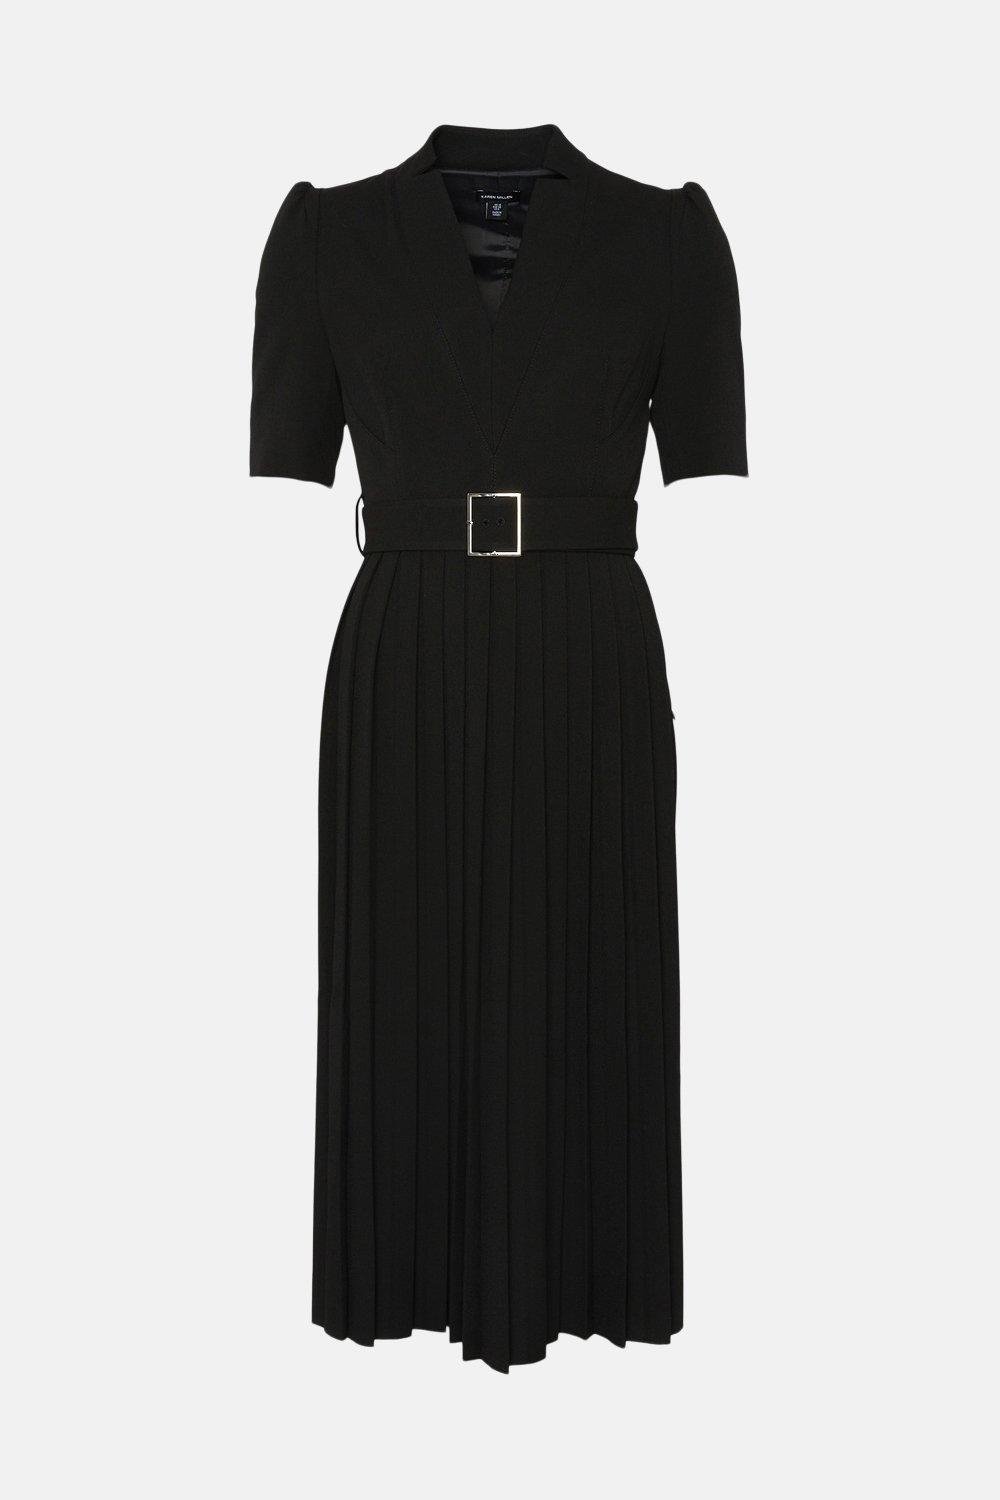 Karen Millen Forever Belted Midi Dress in Black.jpeg